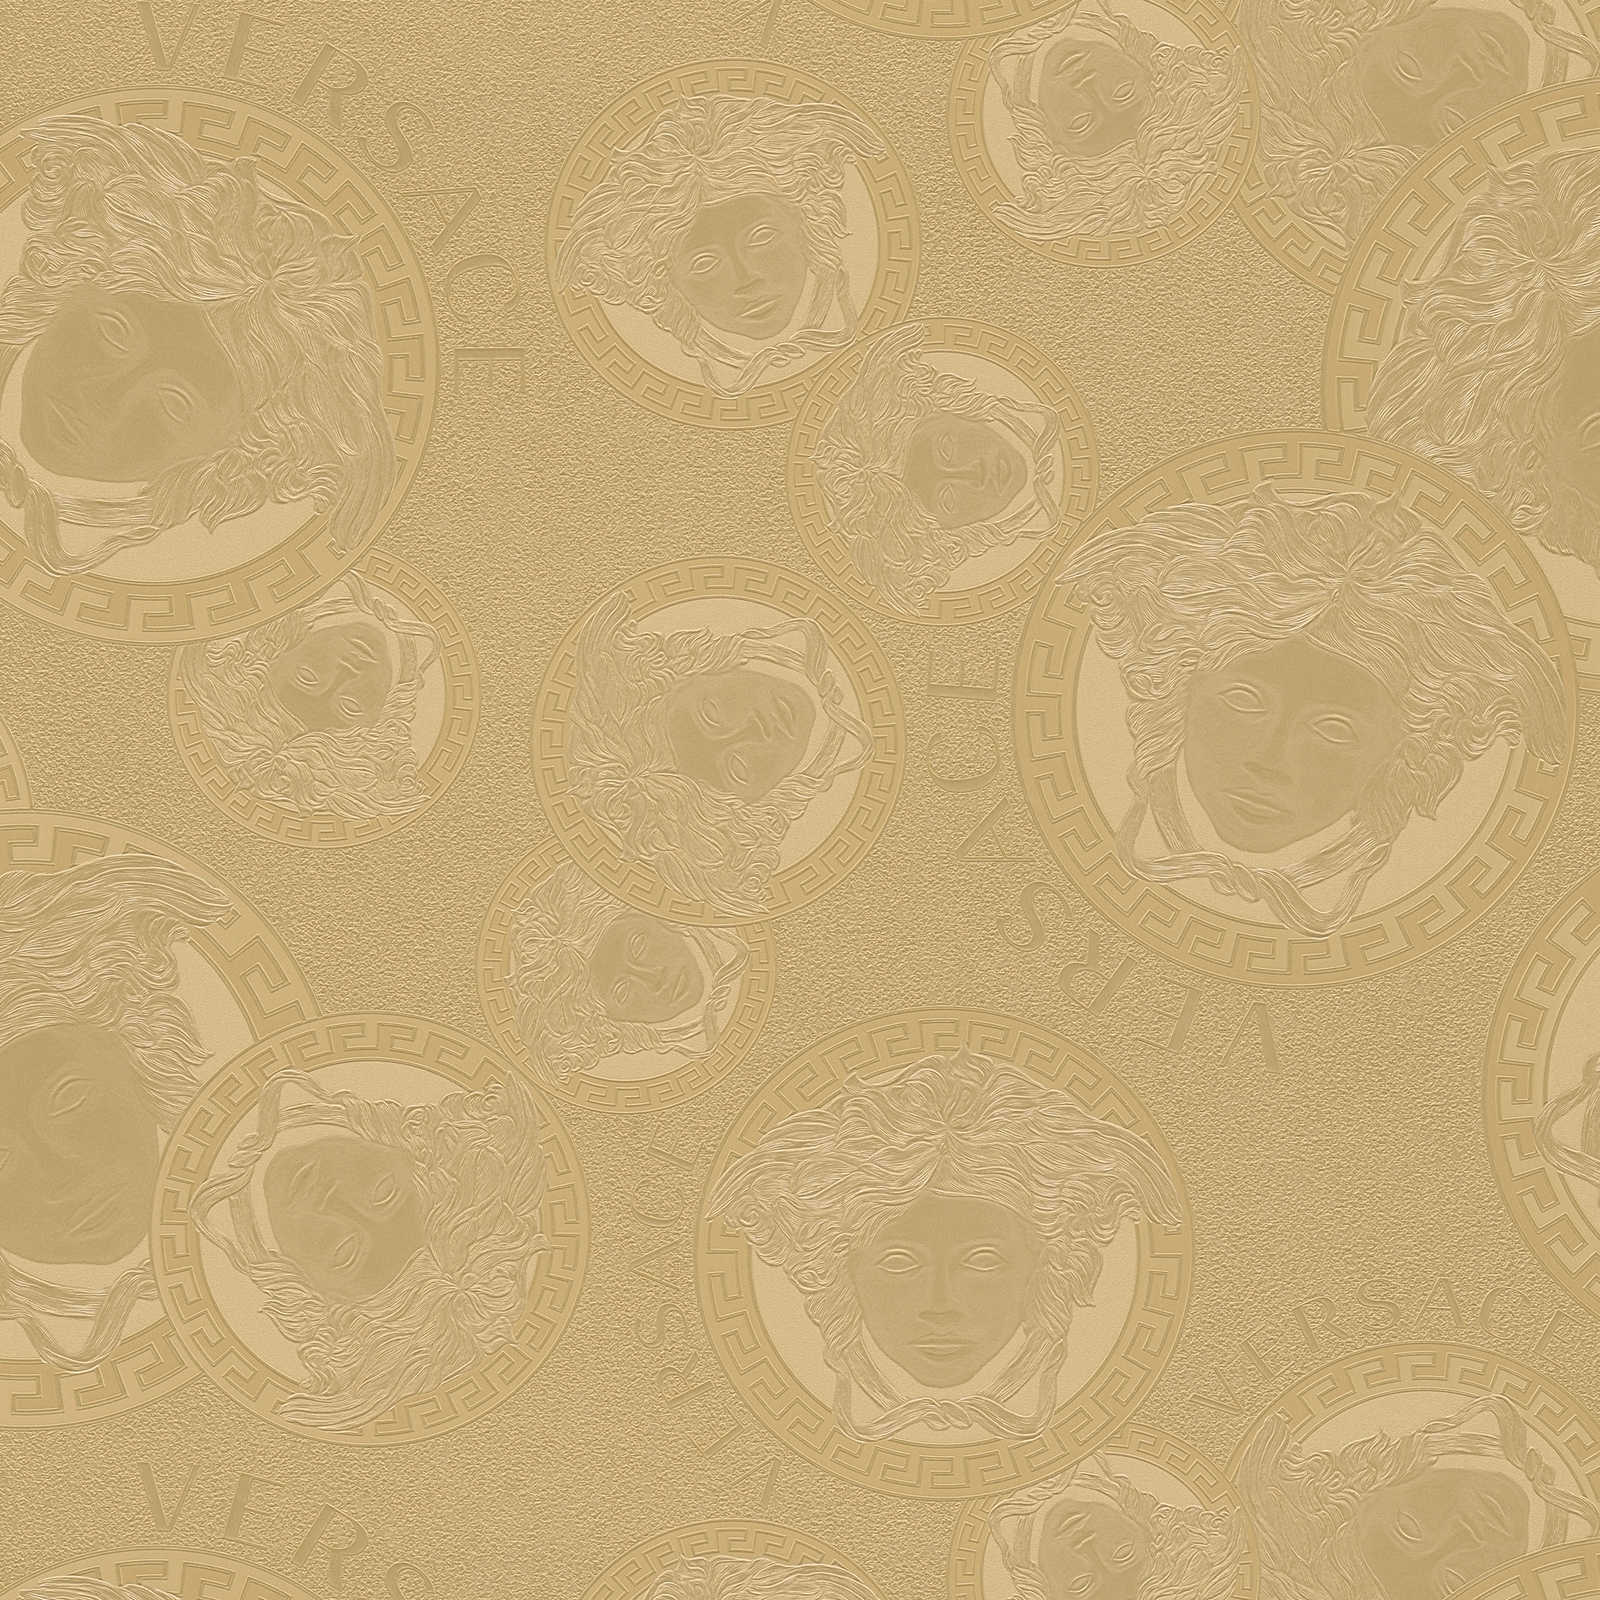         Golden VERSACE wallpaper with Medusa and metallic shine
    